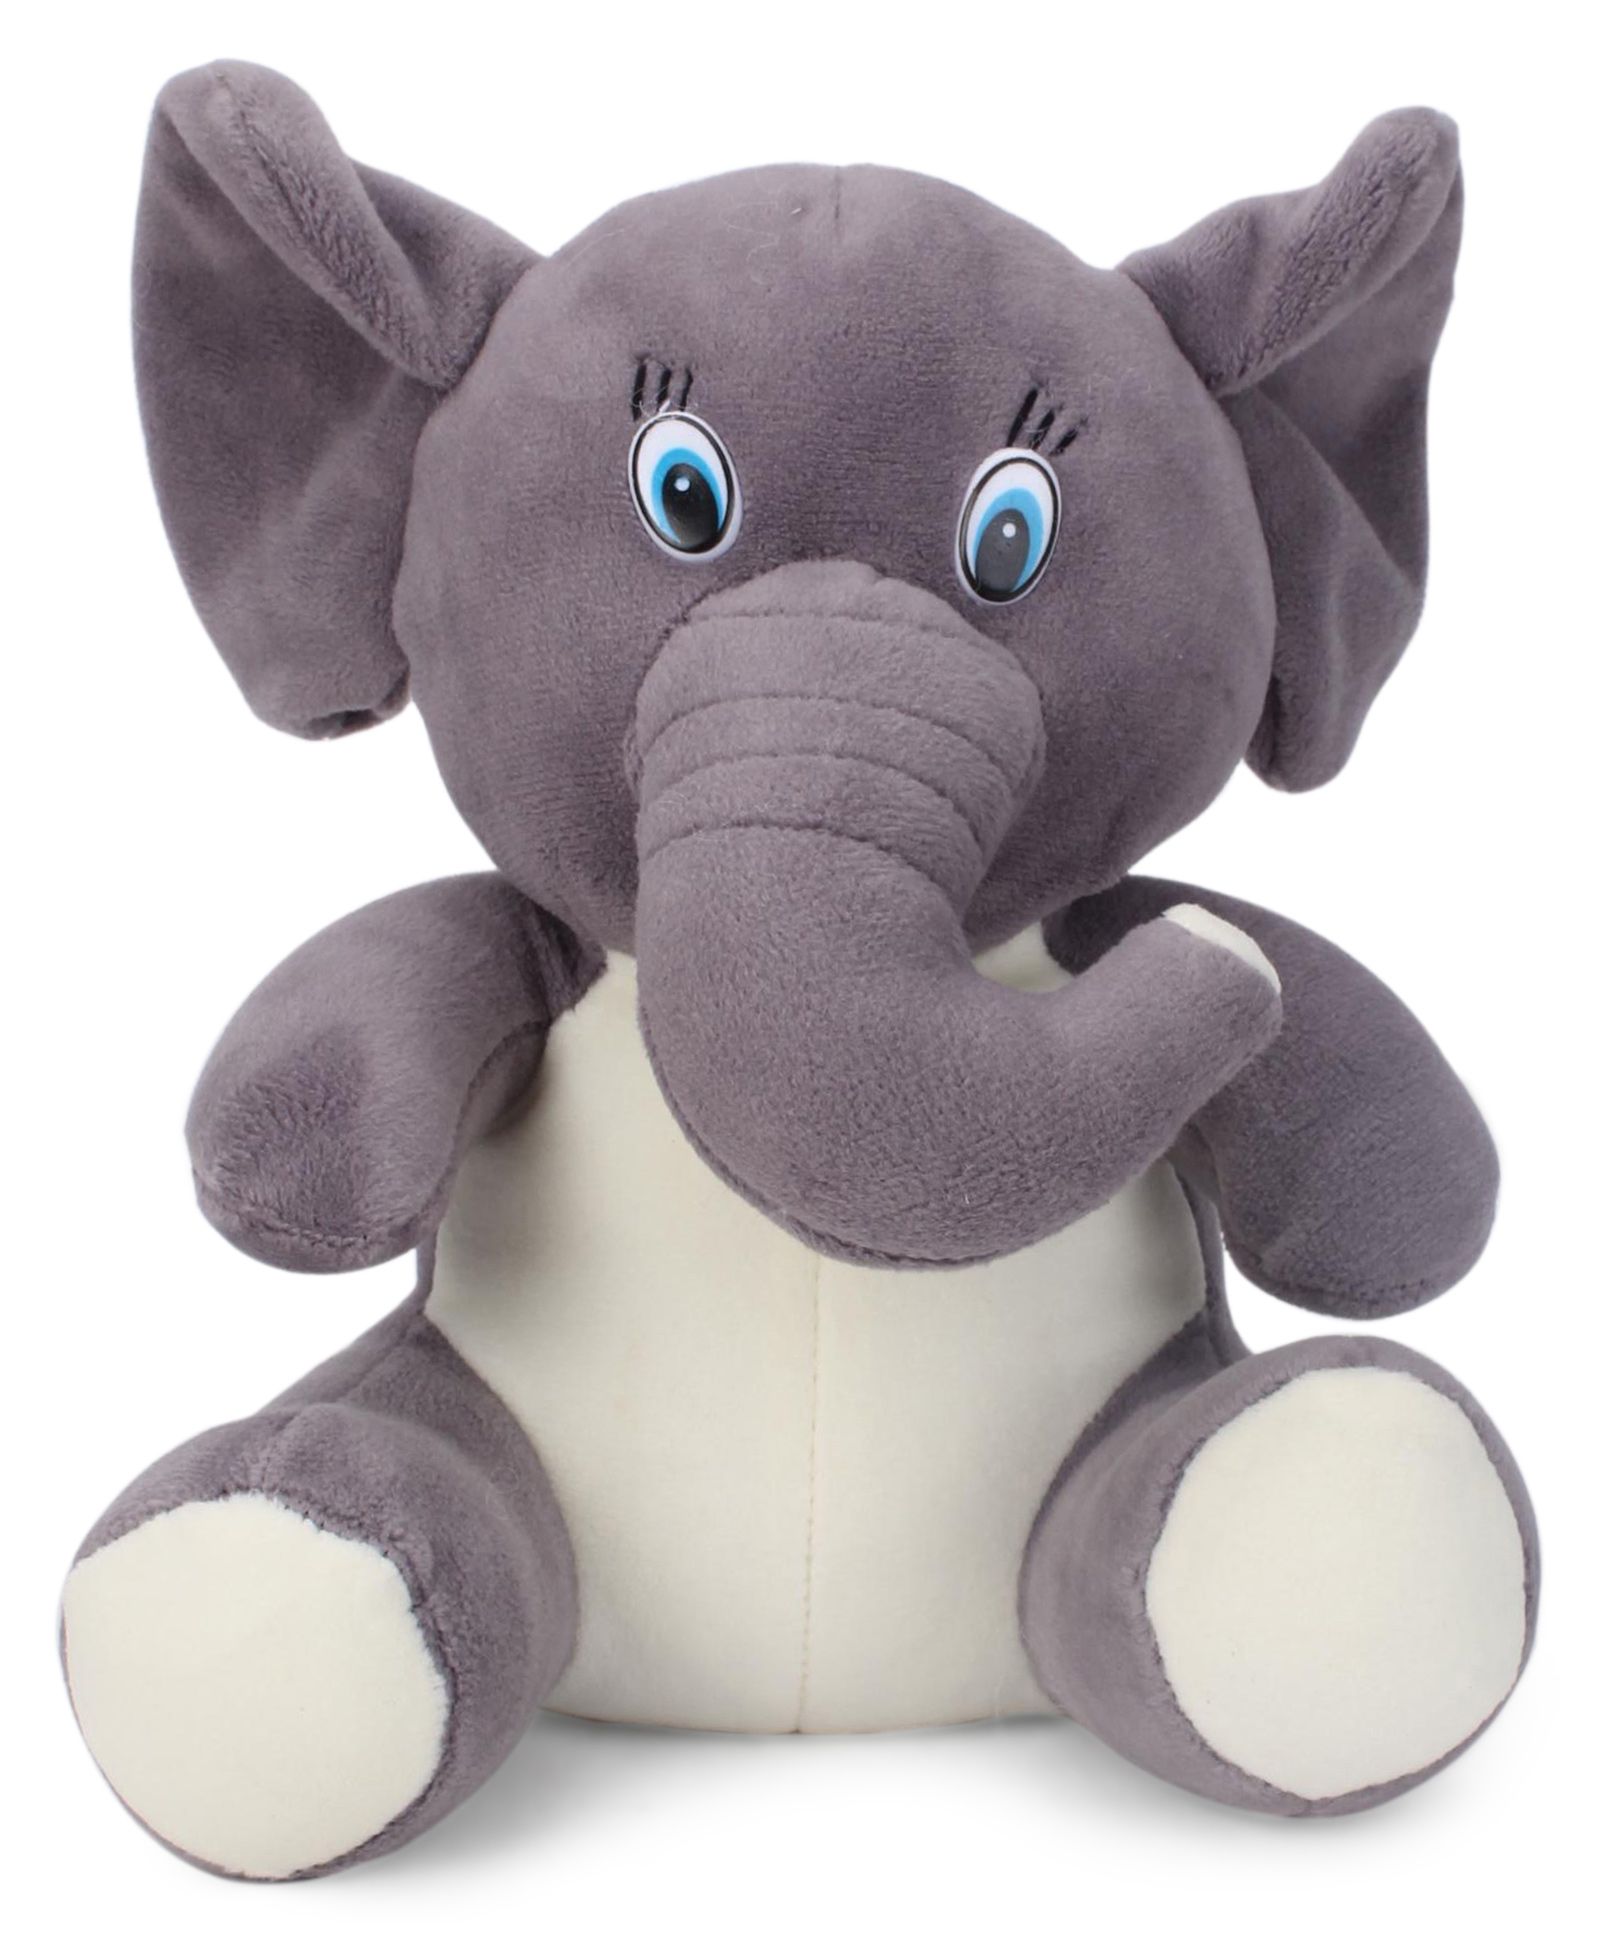 Play Toons Elephant Soft Toy 21 cm 